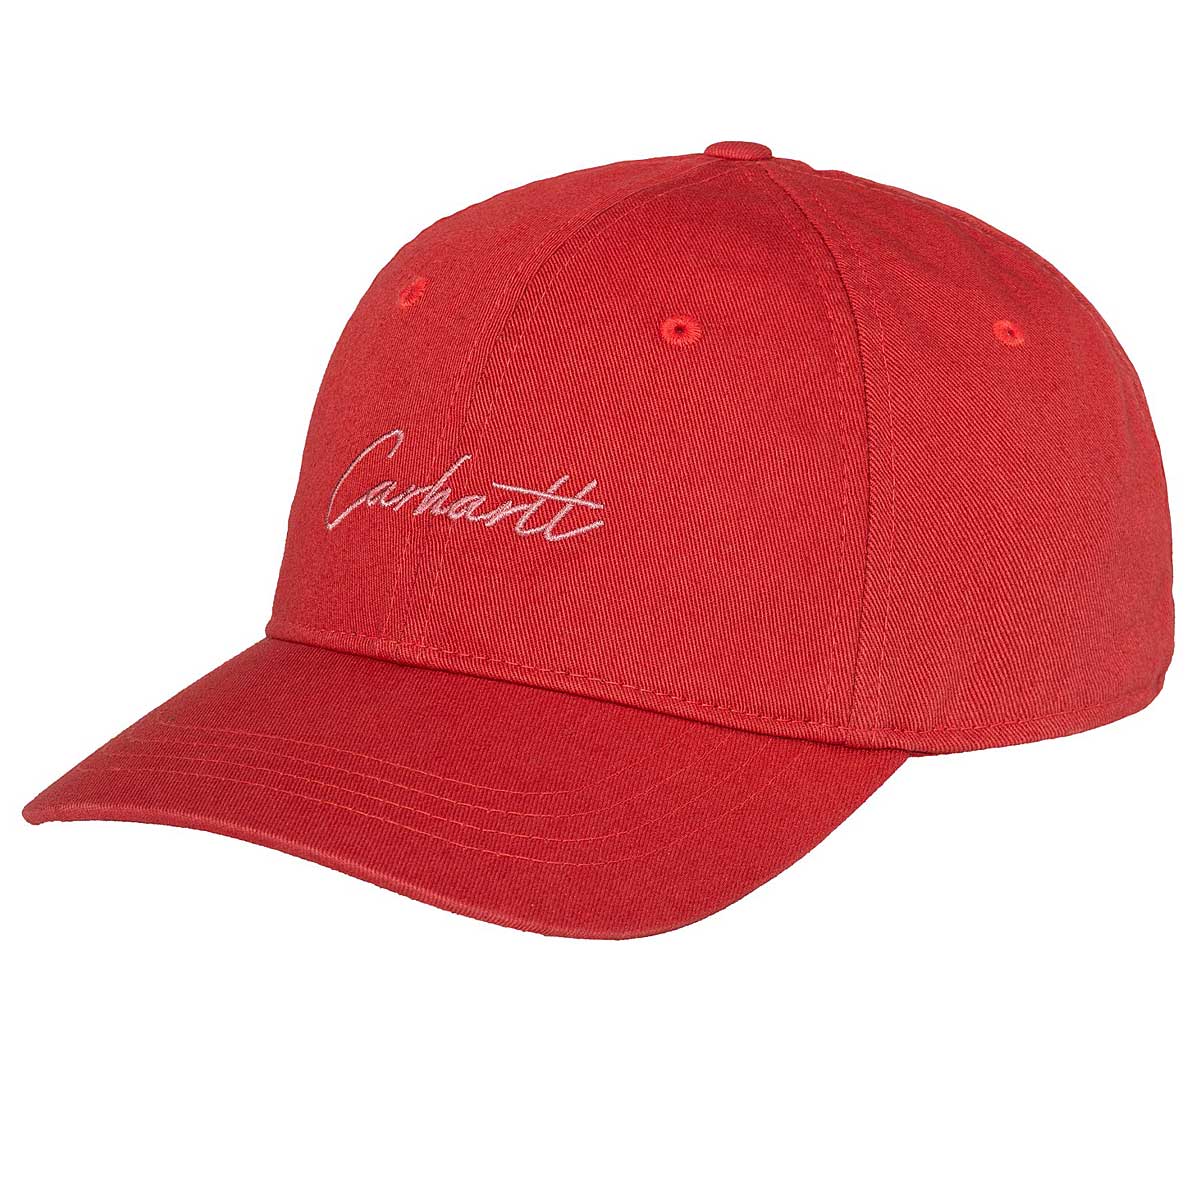 Carhartt Wip Delray Cap, Red ONE